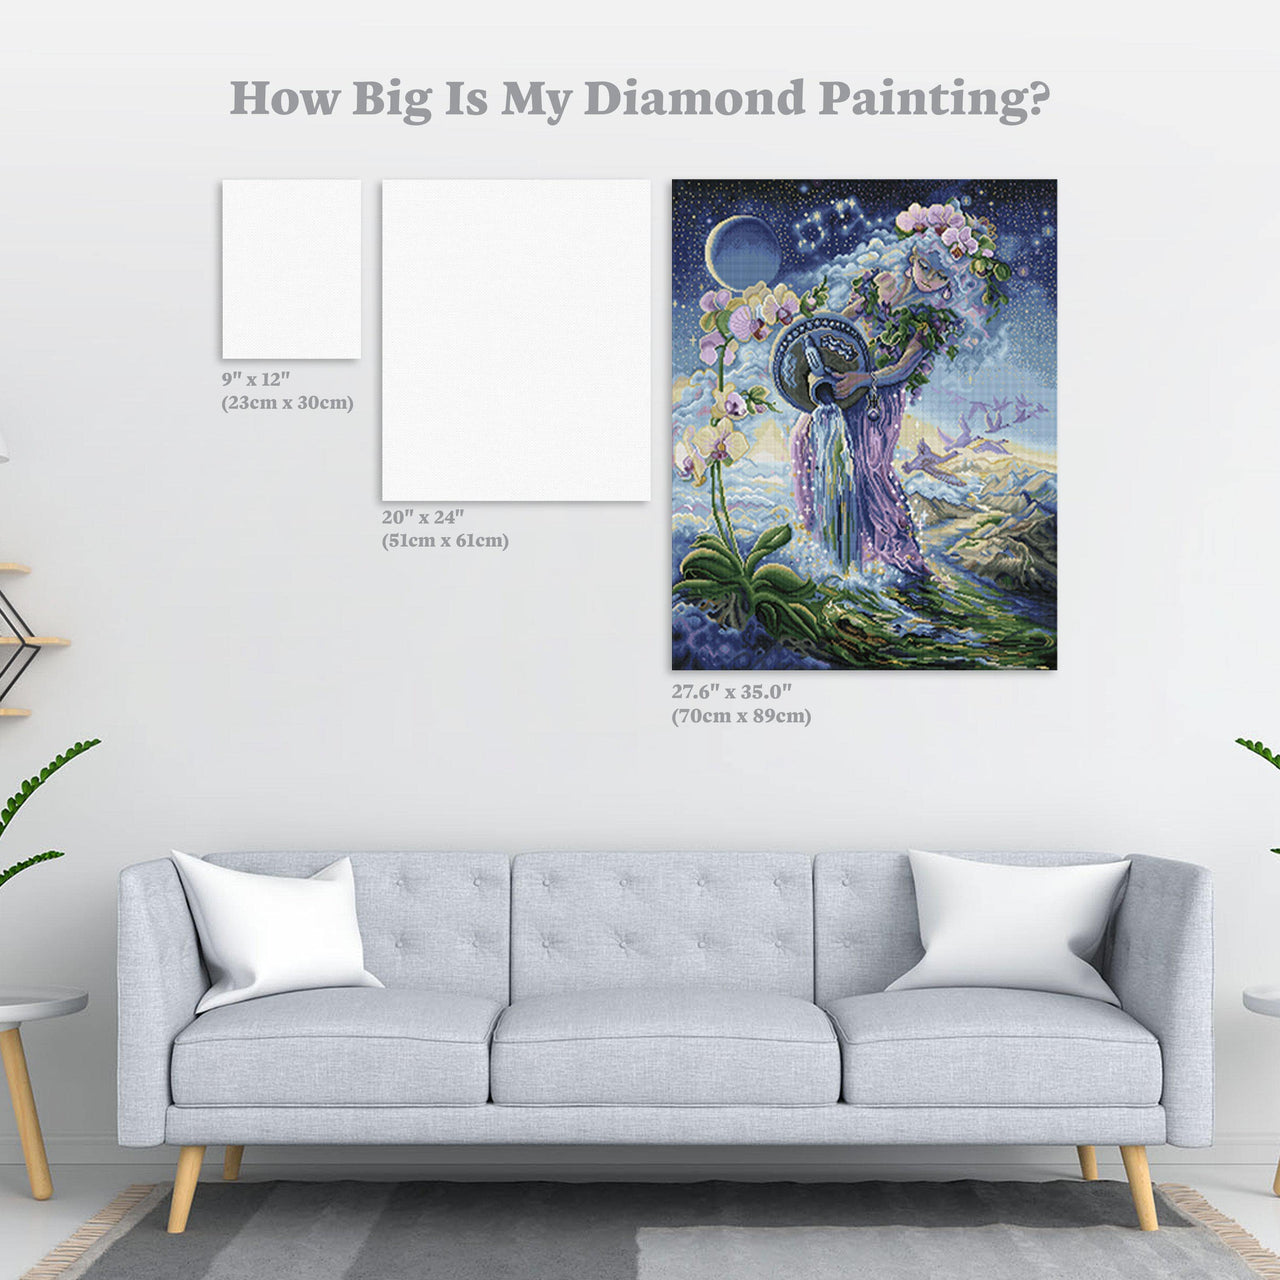 Diamond Painting Aquarius 27.6" x 35″ (70cm x 89cm) / Square with 61 Colors including 4 ABs / 97,781